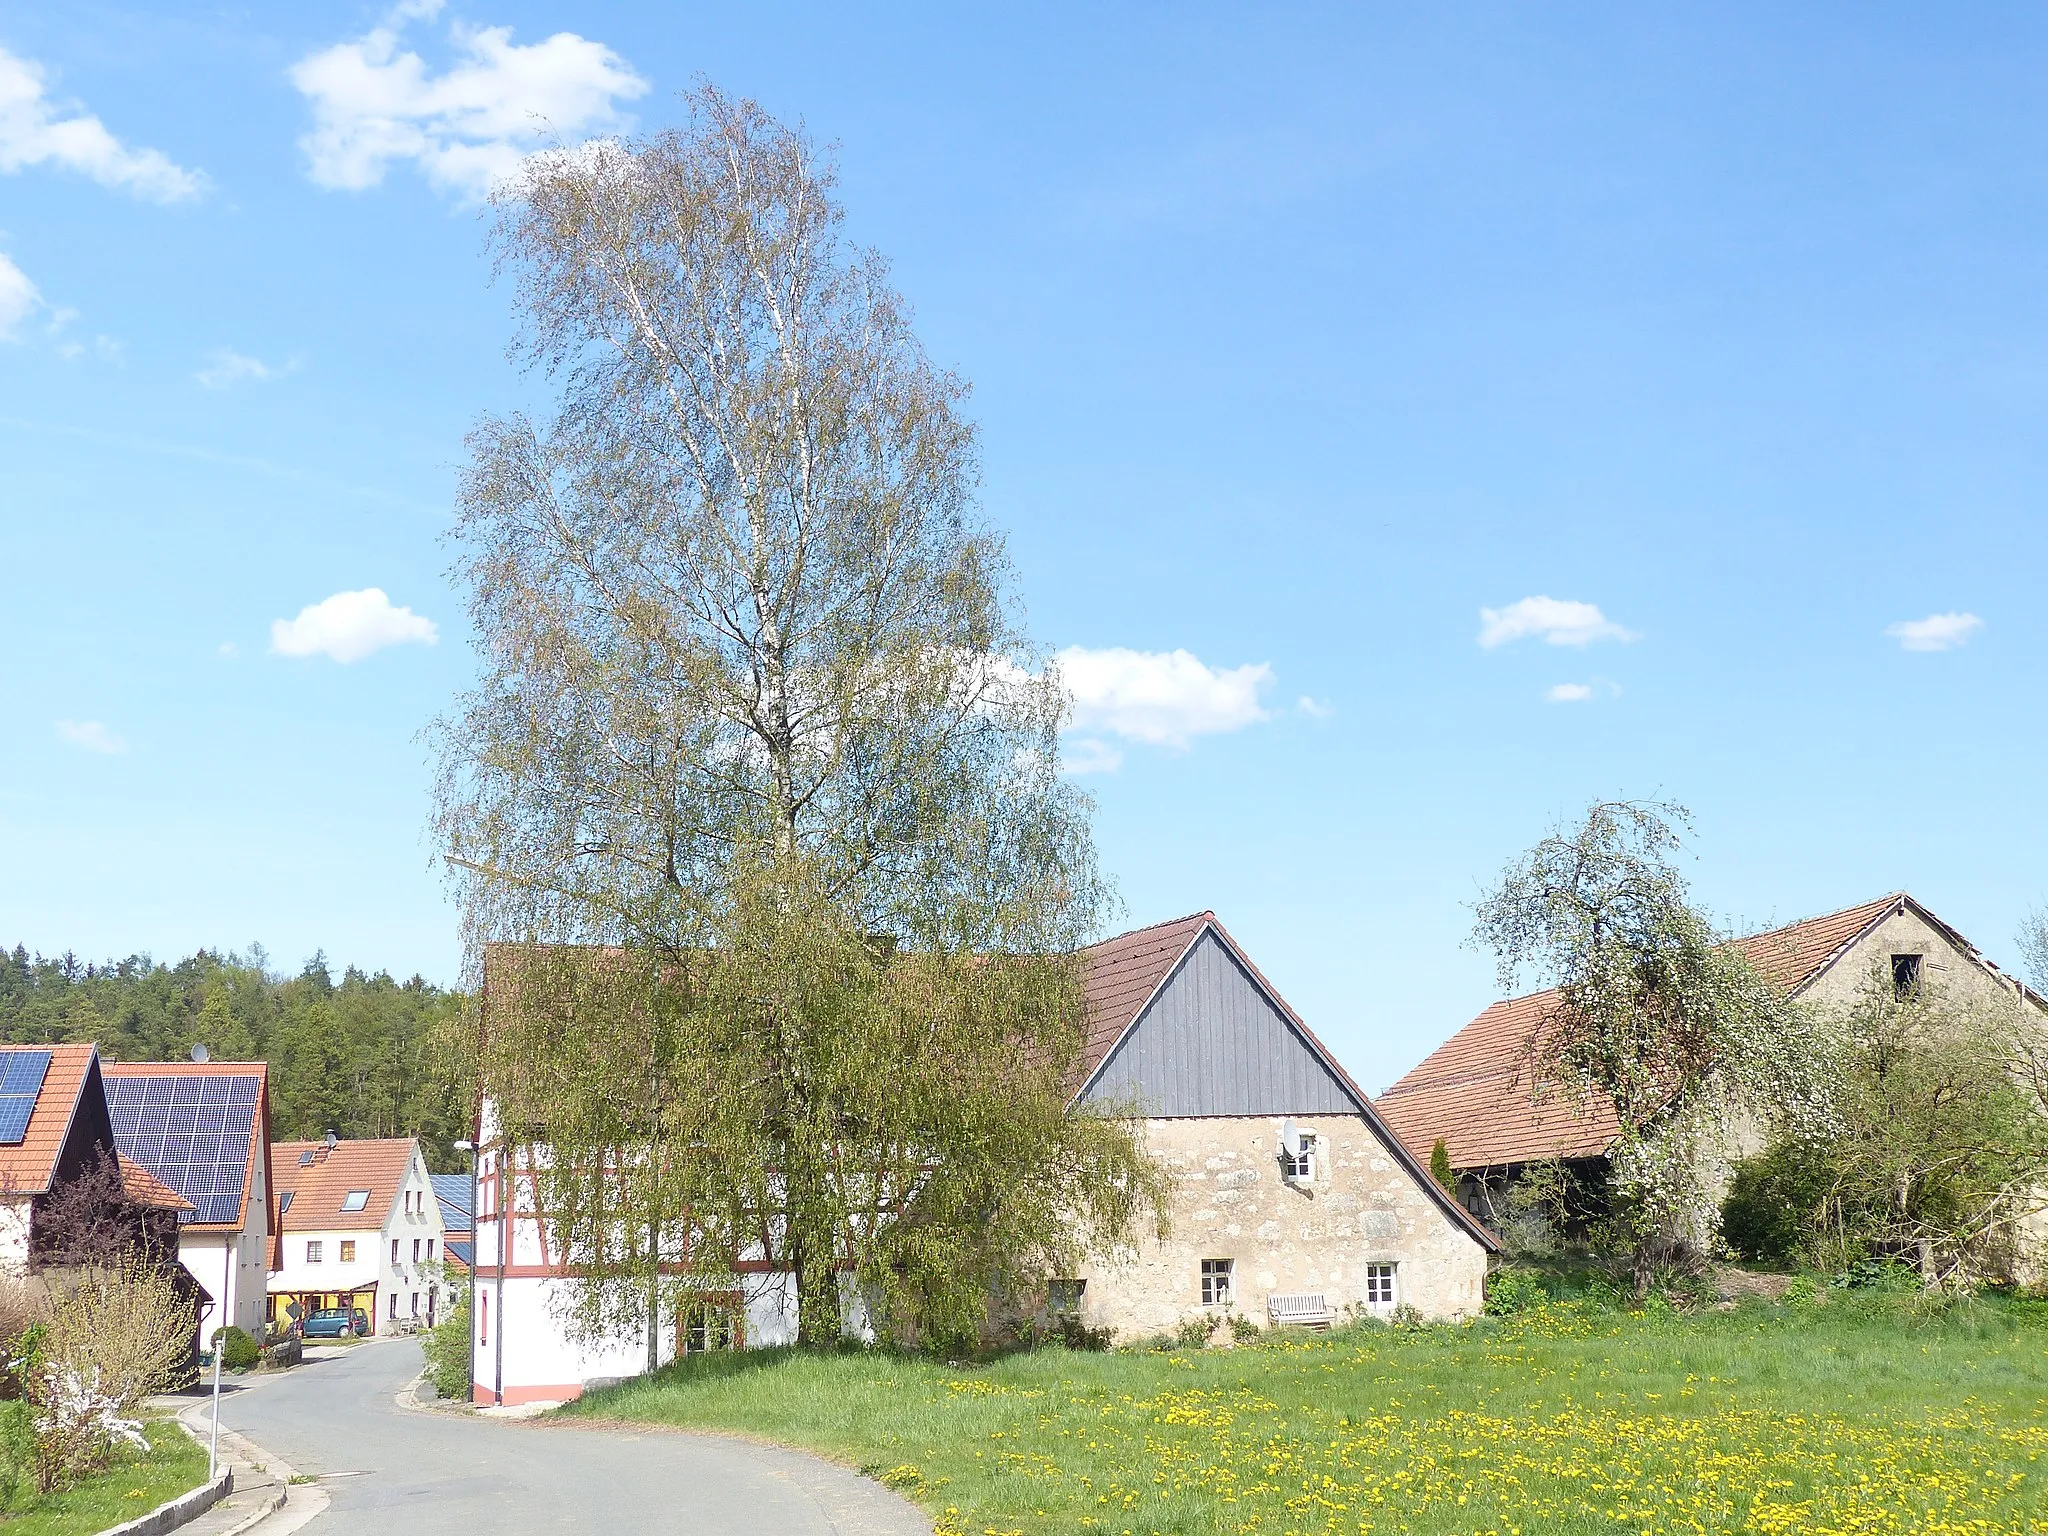 Photo showing: The village Eckenreuth, a district of the town of Betzenstein